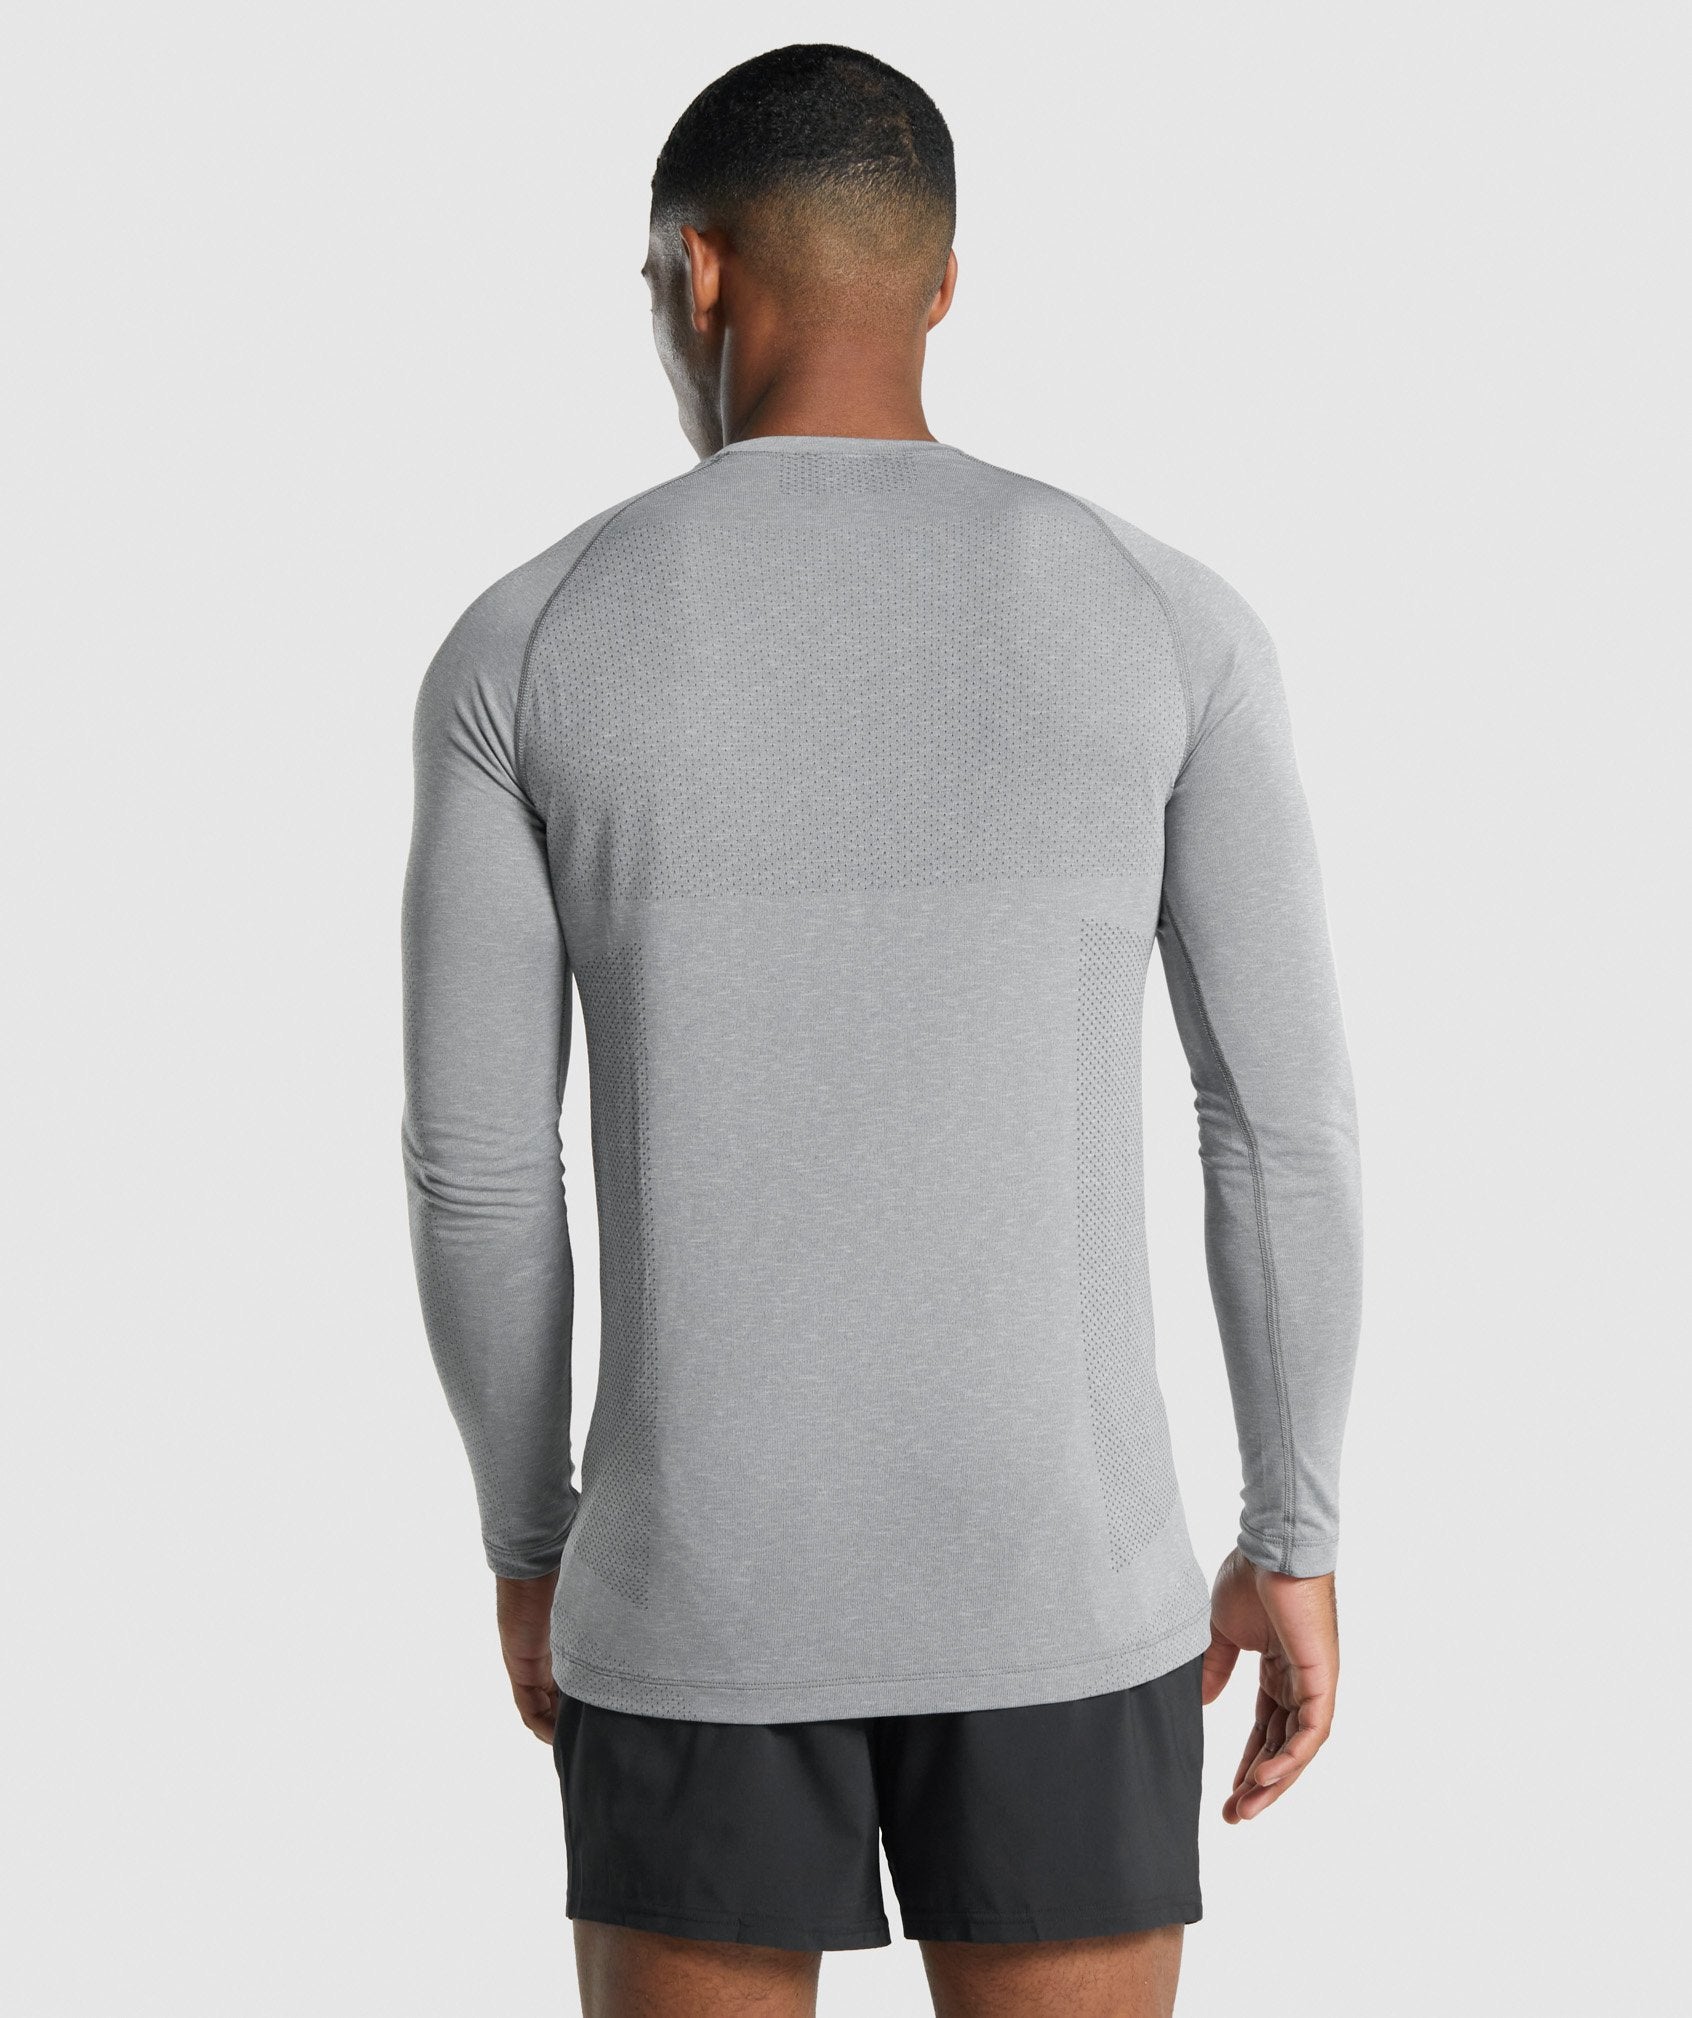 Vital Light Seamless Long Sleeve T-Shirt in Charcoal Marl - view 2